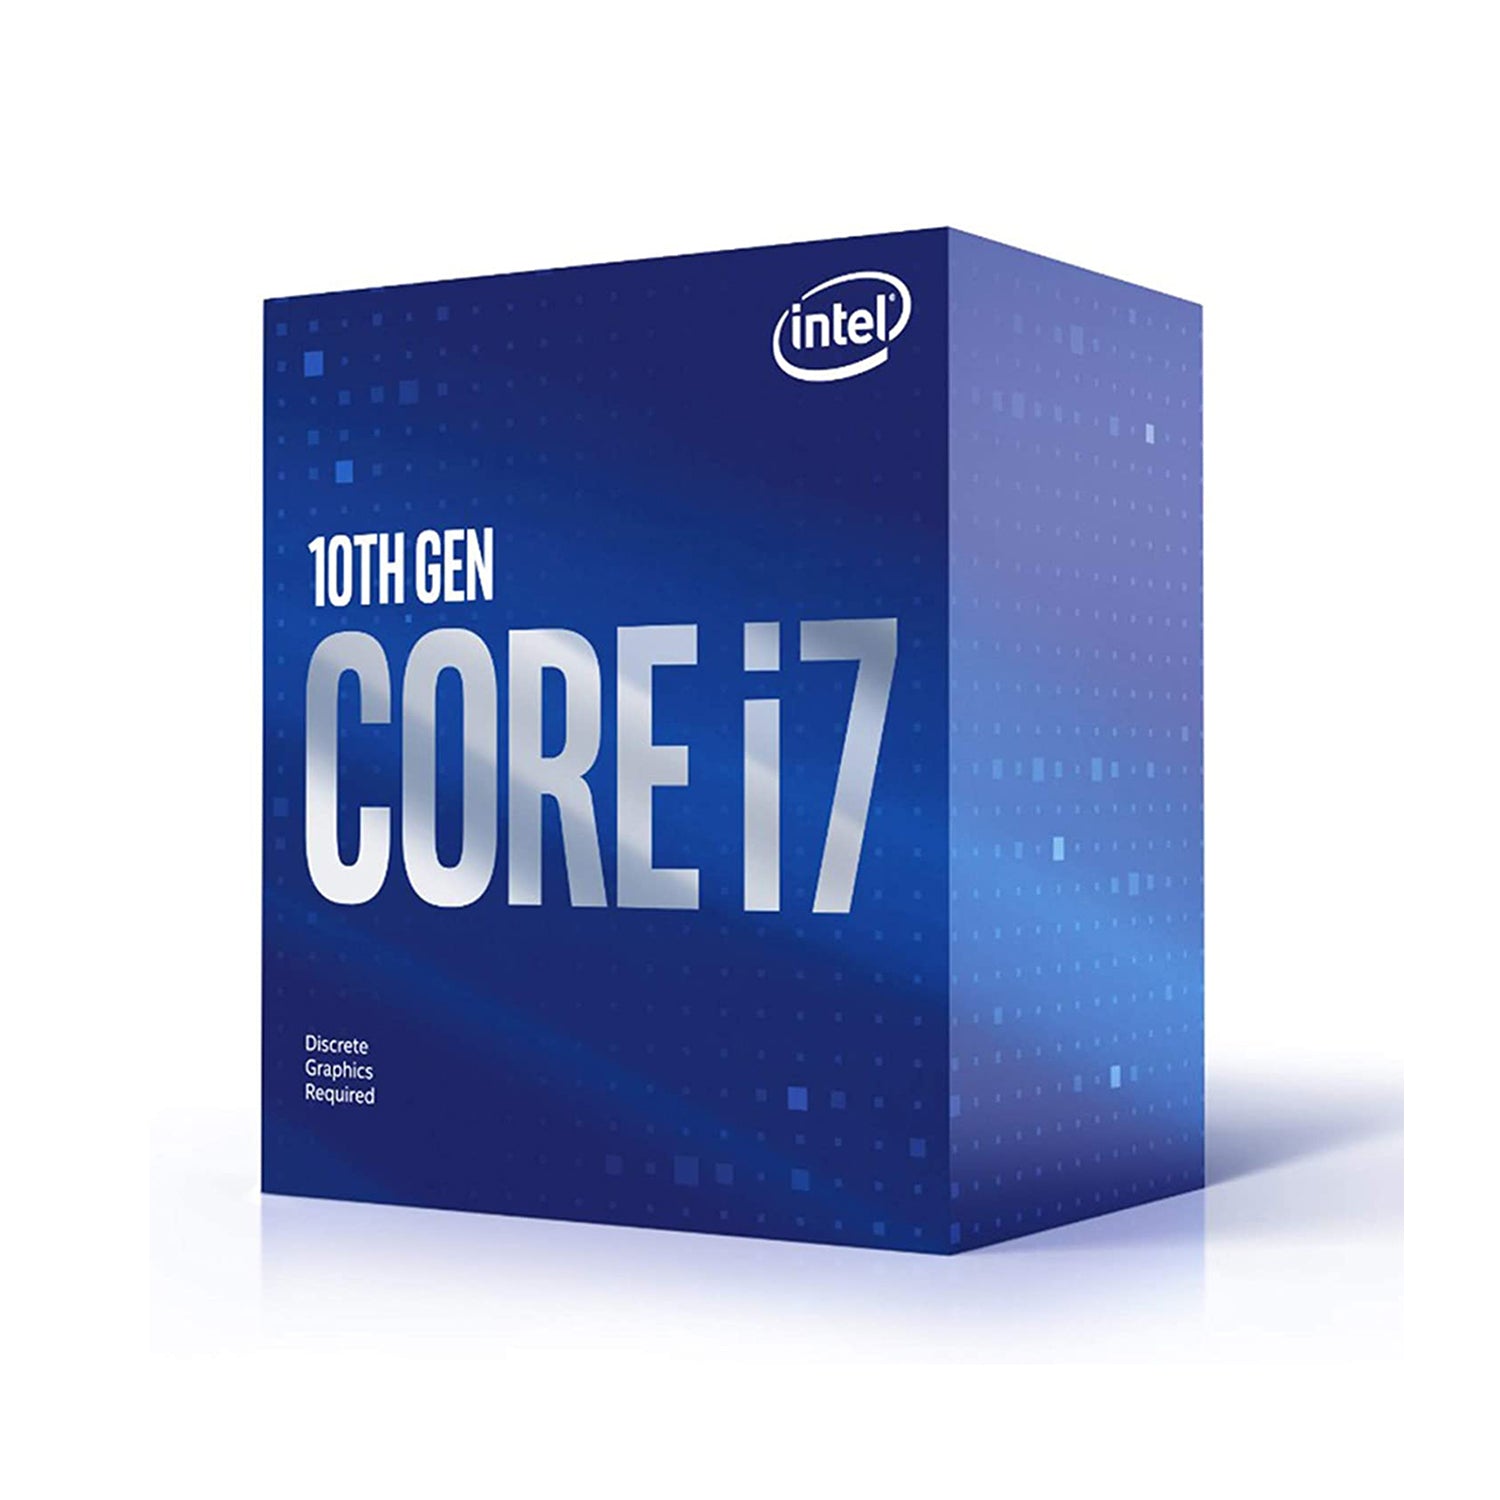 Intel Core i7-10700F - Core i7 10th Gen Comet Lake 8-Core 2.9 GHz up to 4.80 GHz LGA 1200, 16 MB Intel Smart Cache, 65W, Desktop Processor - BX8070110700F